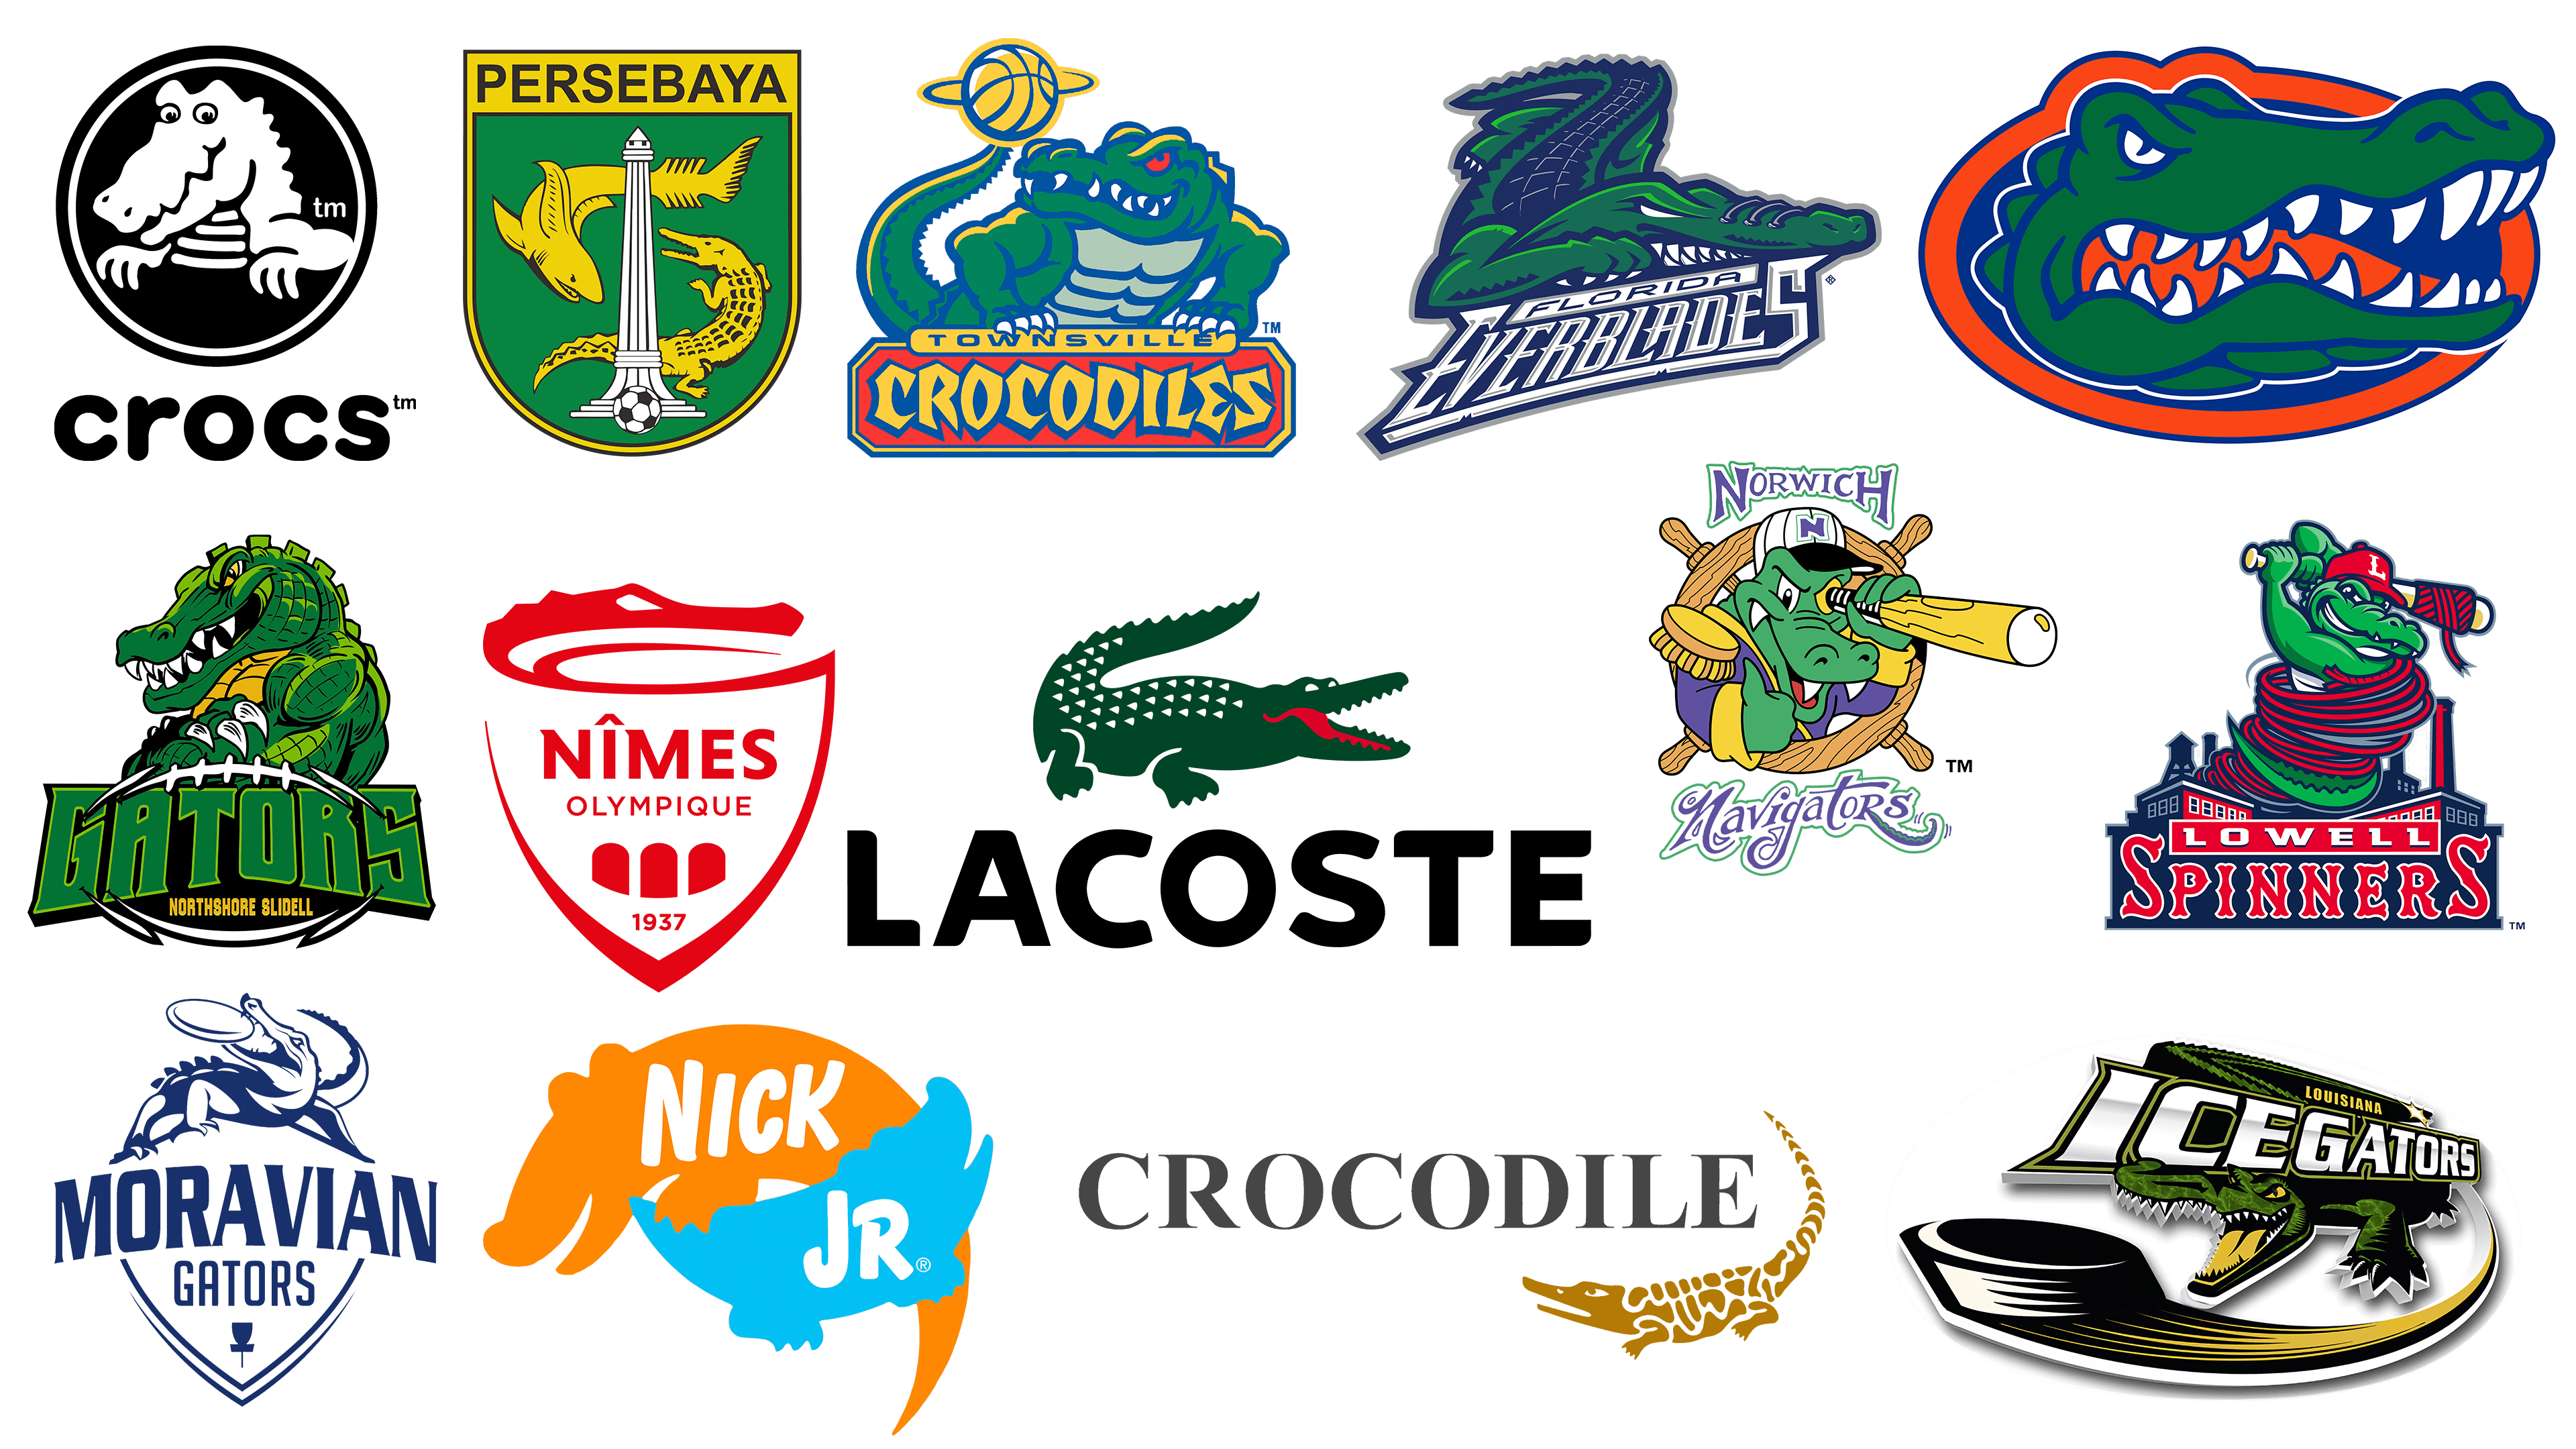 Fashion Brand with a Crocodile Logo Crossword